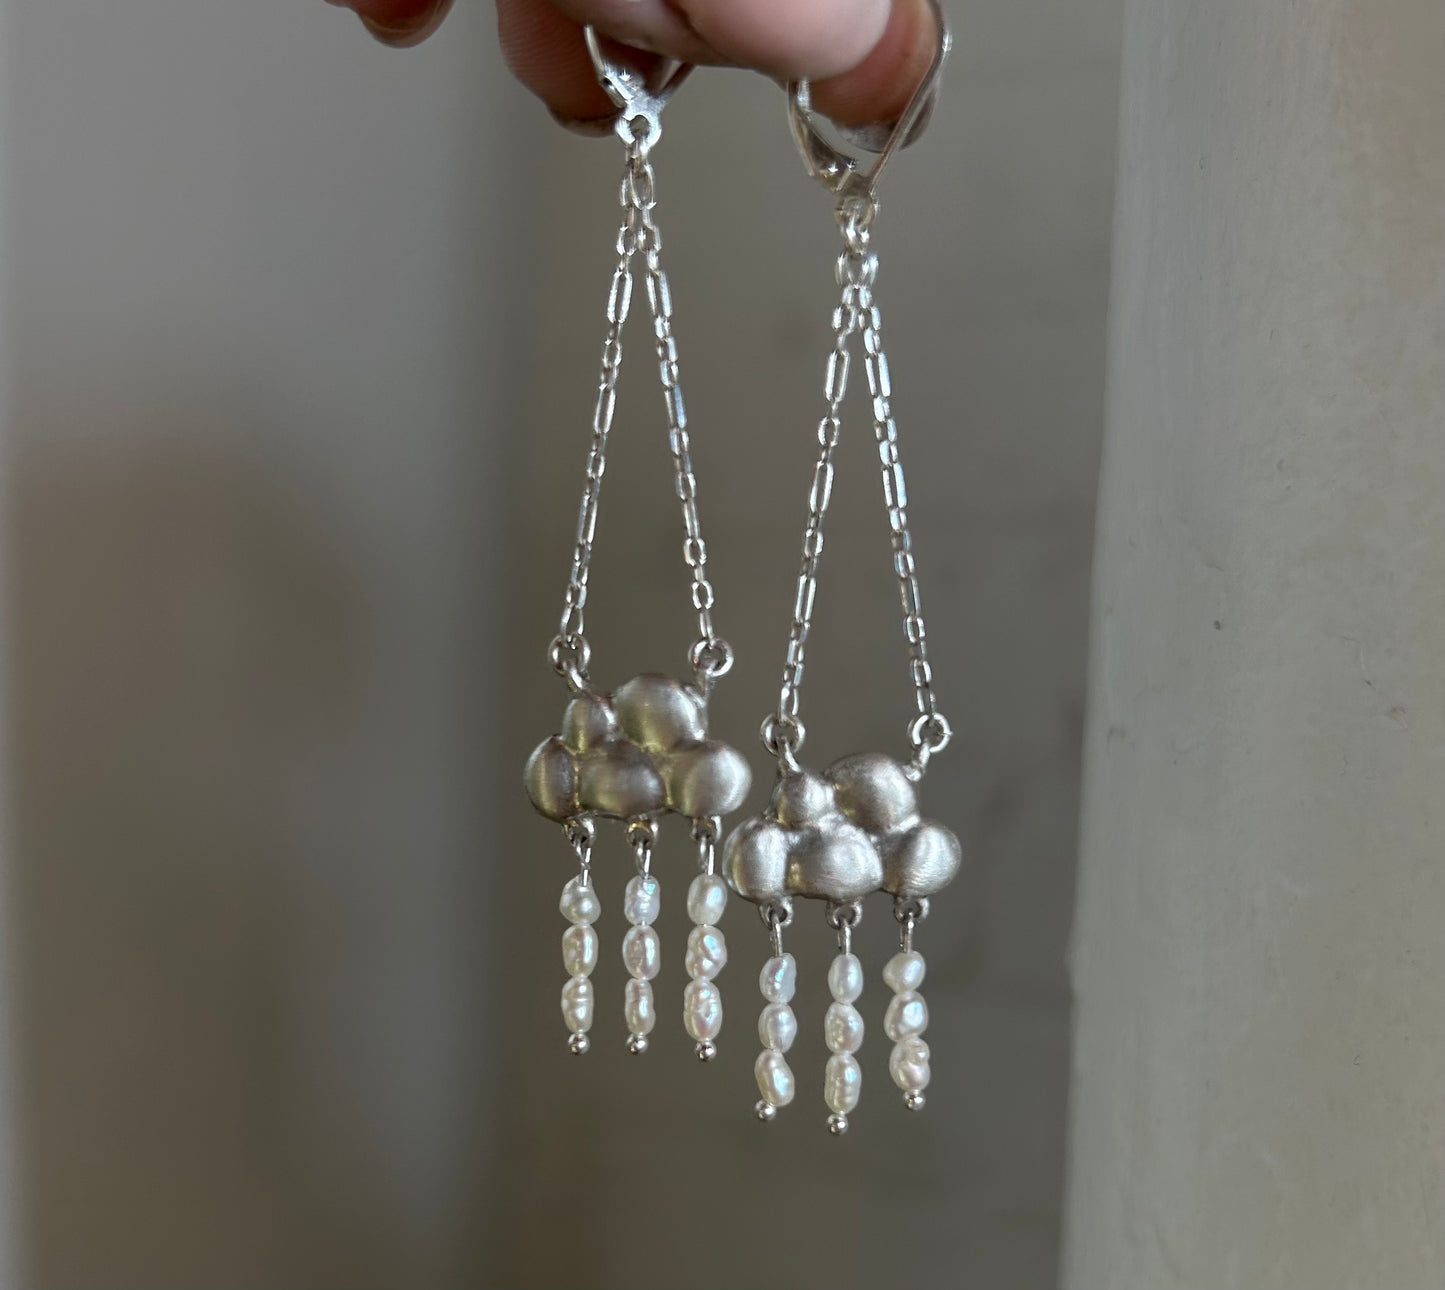 rainy day earrings